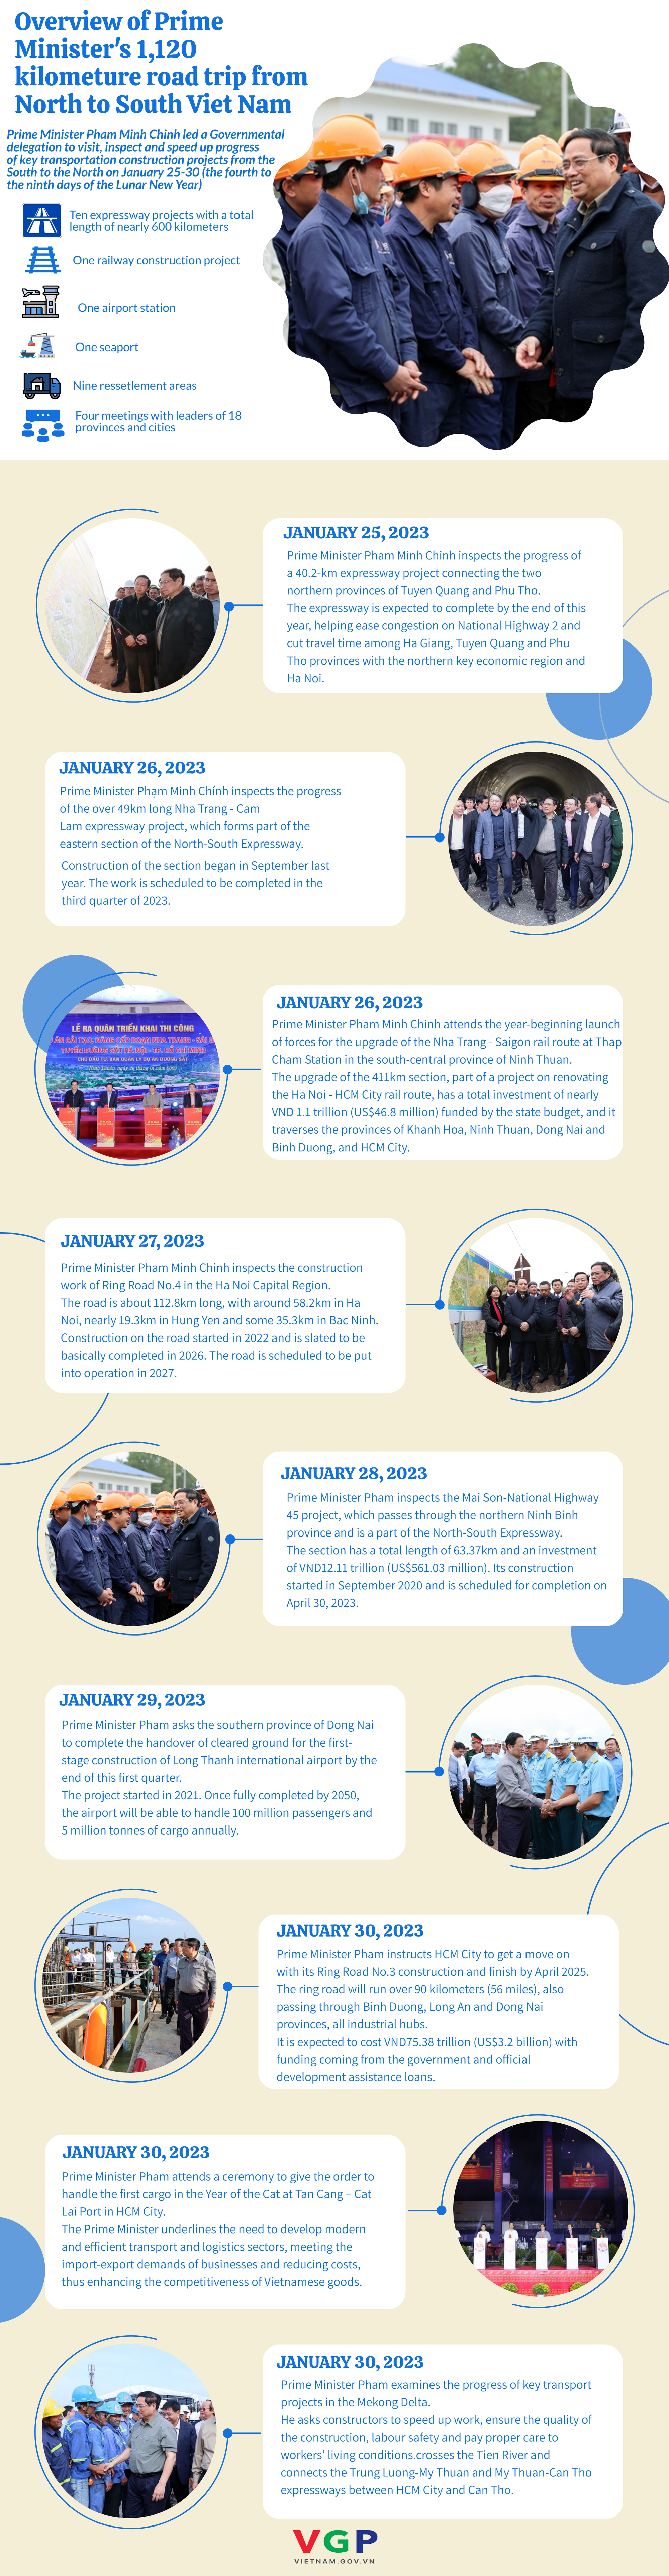 Timeline of Prime Minister's Spring tour  - Ảnh 1.